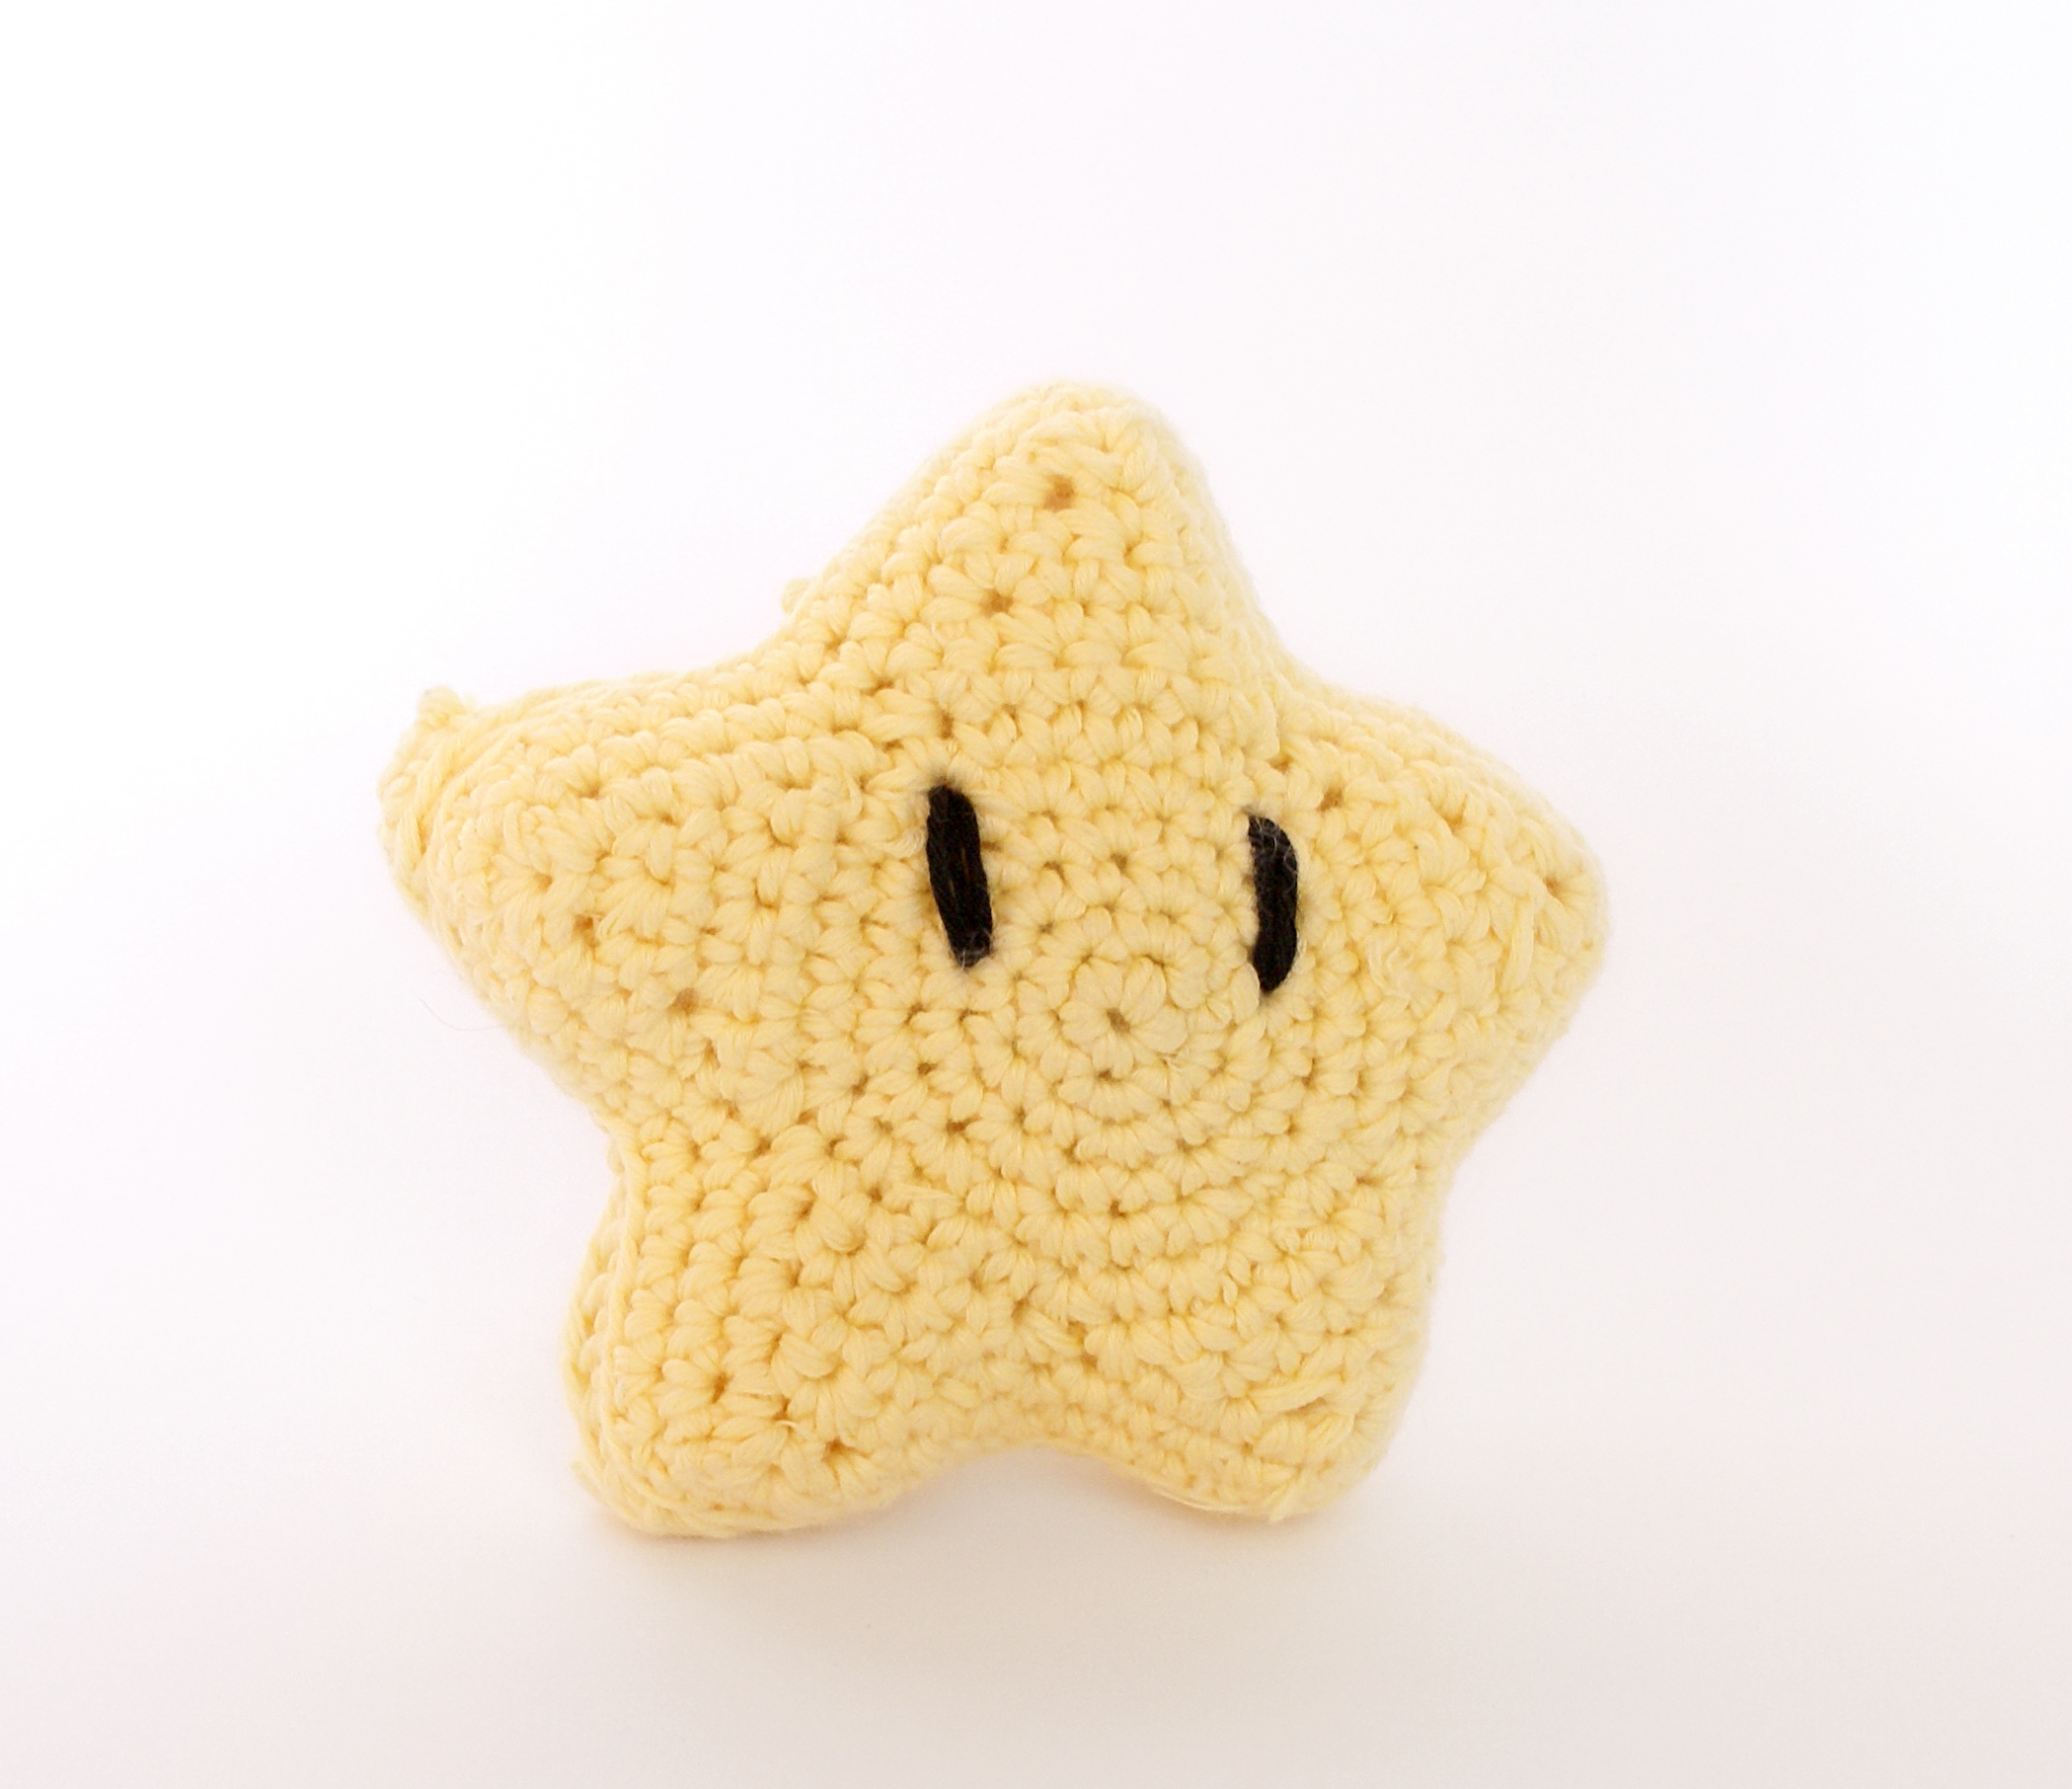 Star amigurumi free pattern crochet with video tutorial step by step